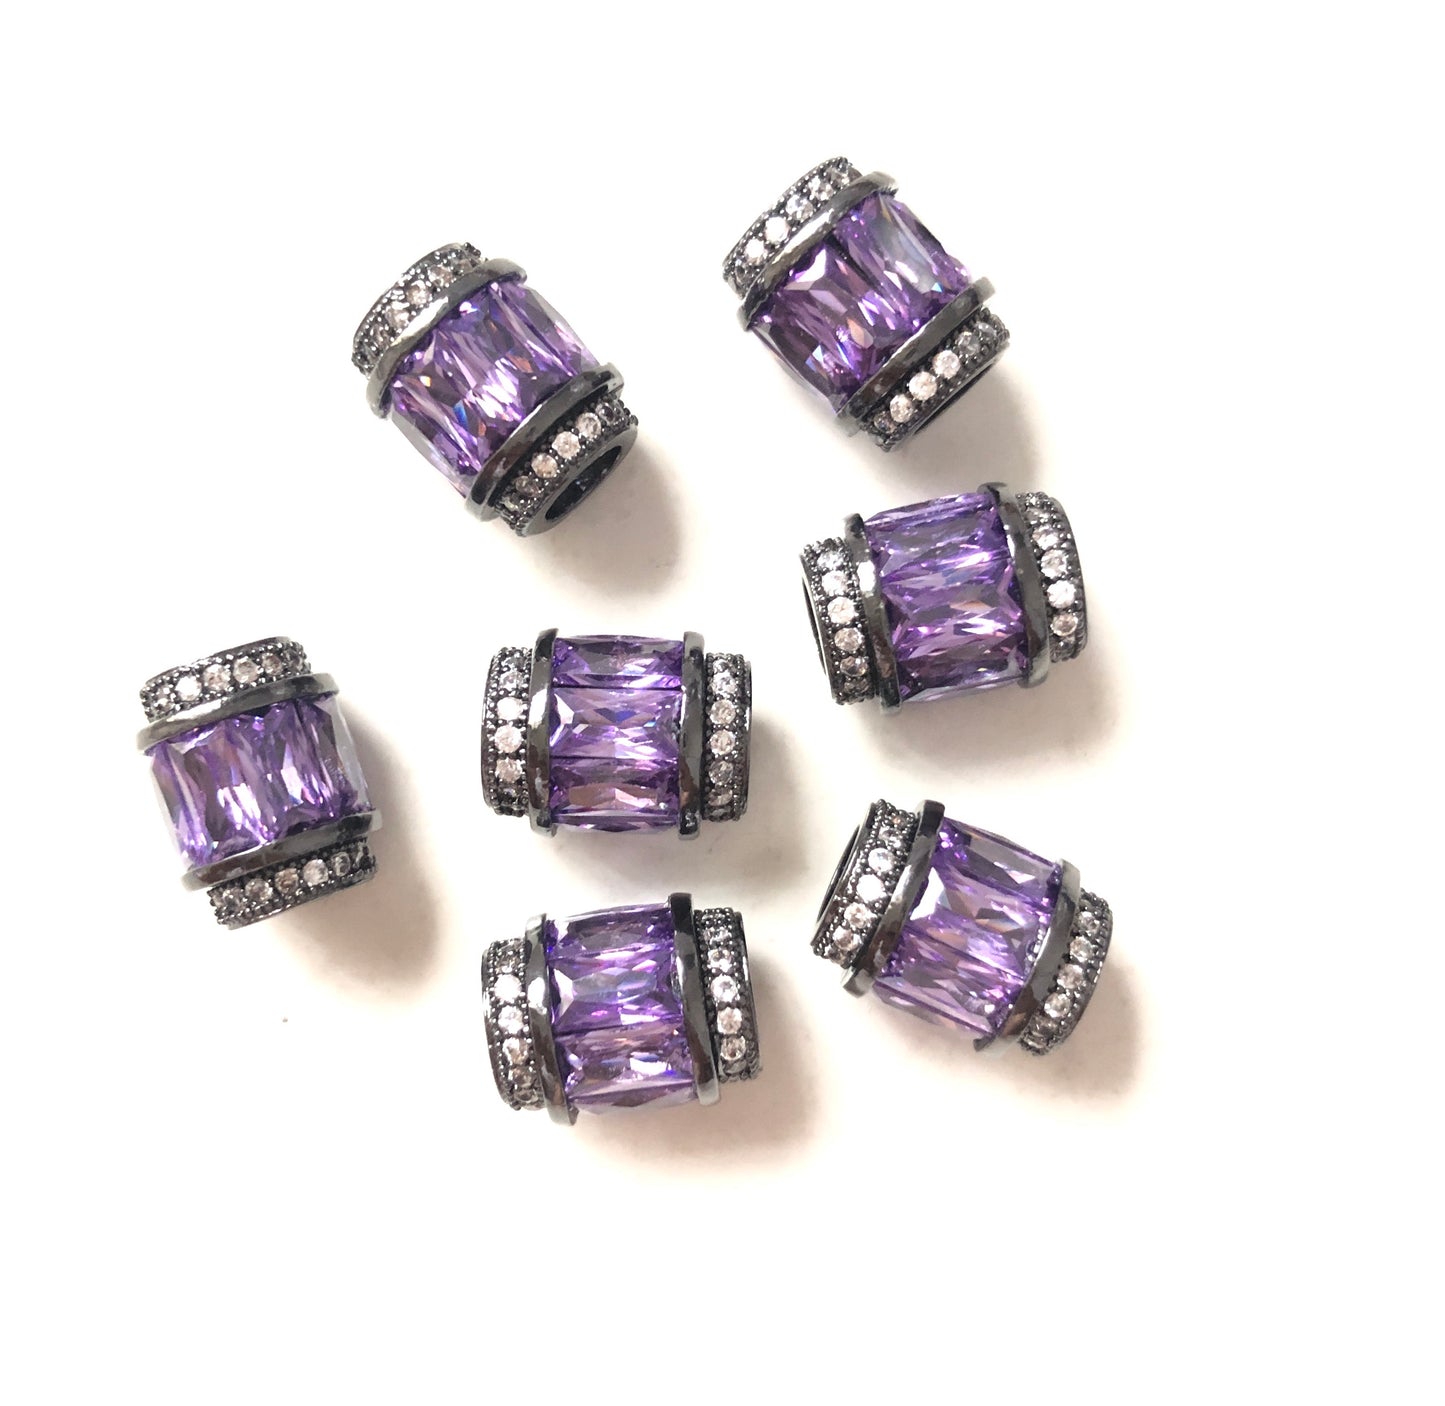 10pcs/lot 12*10mm Purple CZ Paved Big Hole Spacers Black CZ Paved Spacers Big Hole Beads New Spacers Arrivals Charms Beads Beyond